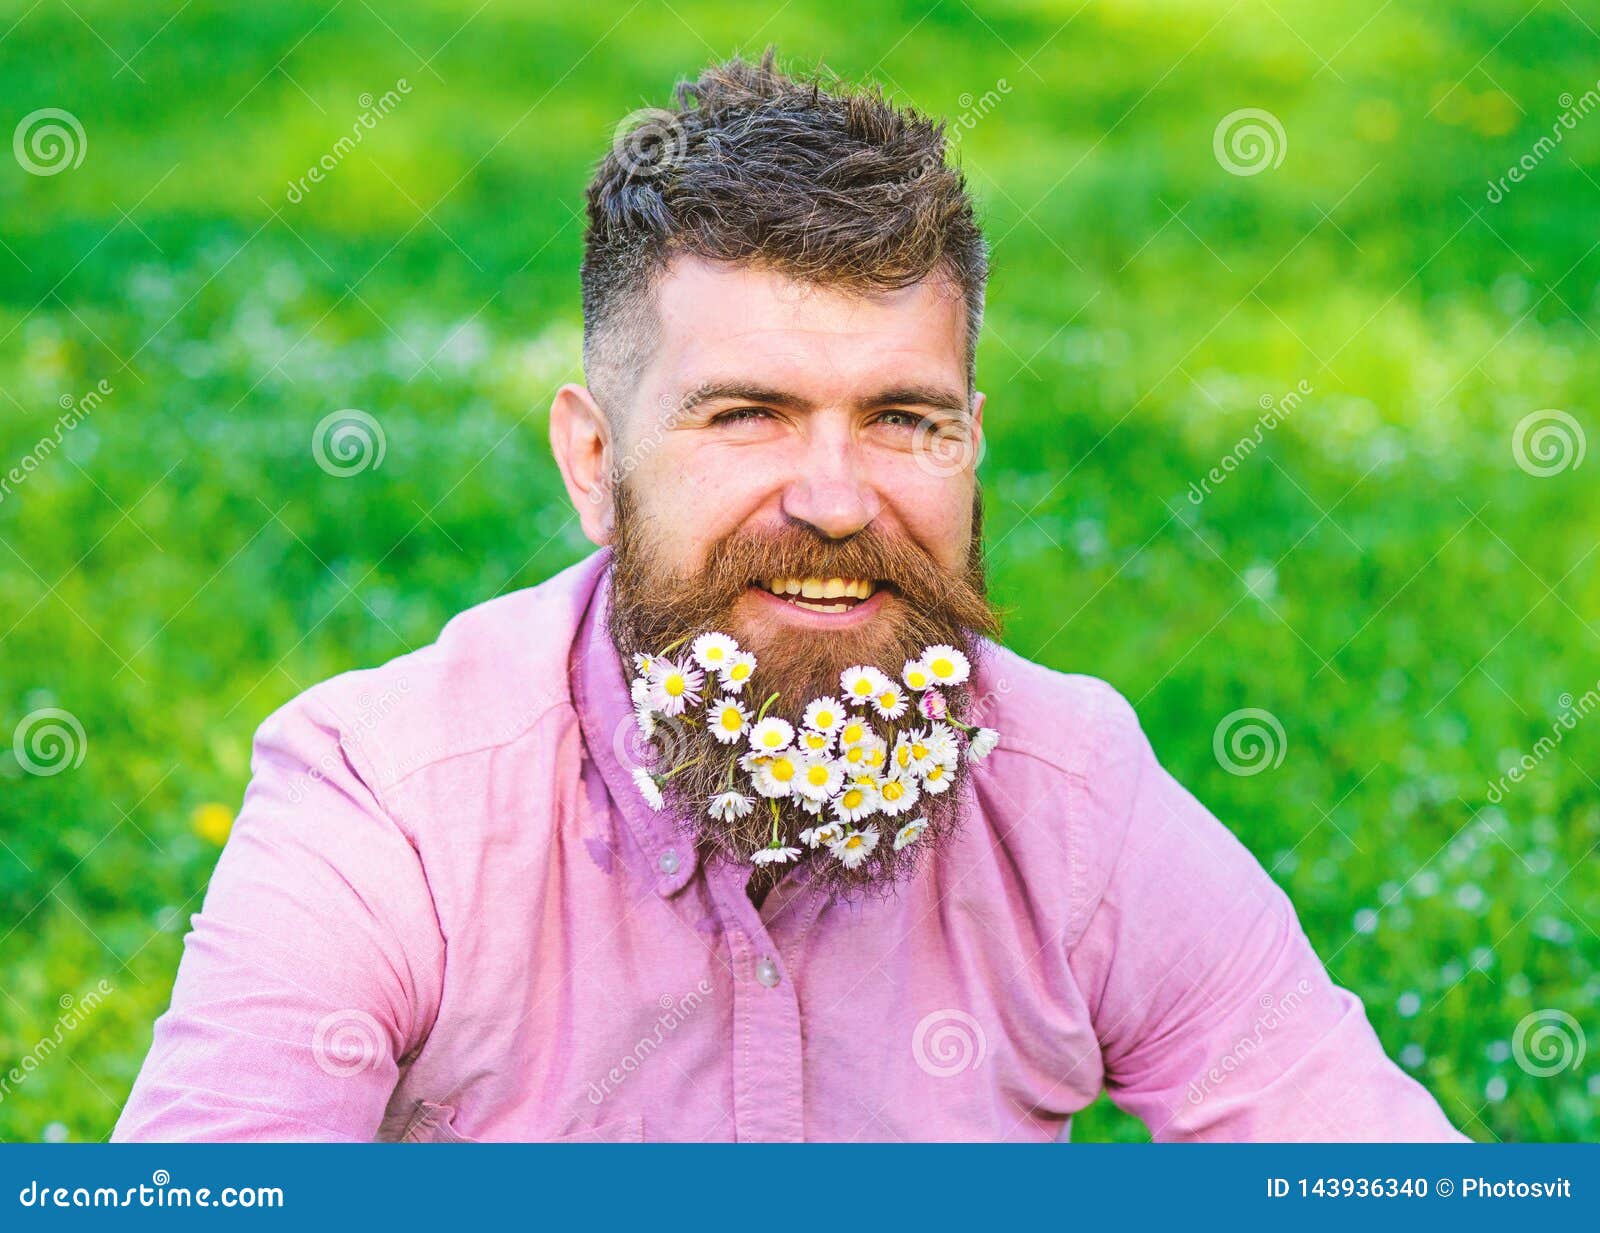 https://thumbs.dreamstime.com/z/man-beard-happy-face-enjoy-life-ecologic-environment-eco-friendly-lifestyle-concept-hipster-daisies-looks-bearded-daisy-143936340.jpg